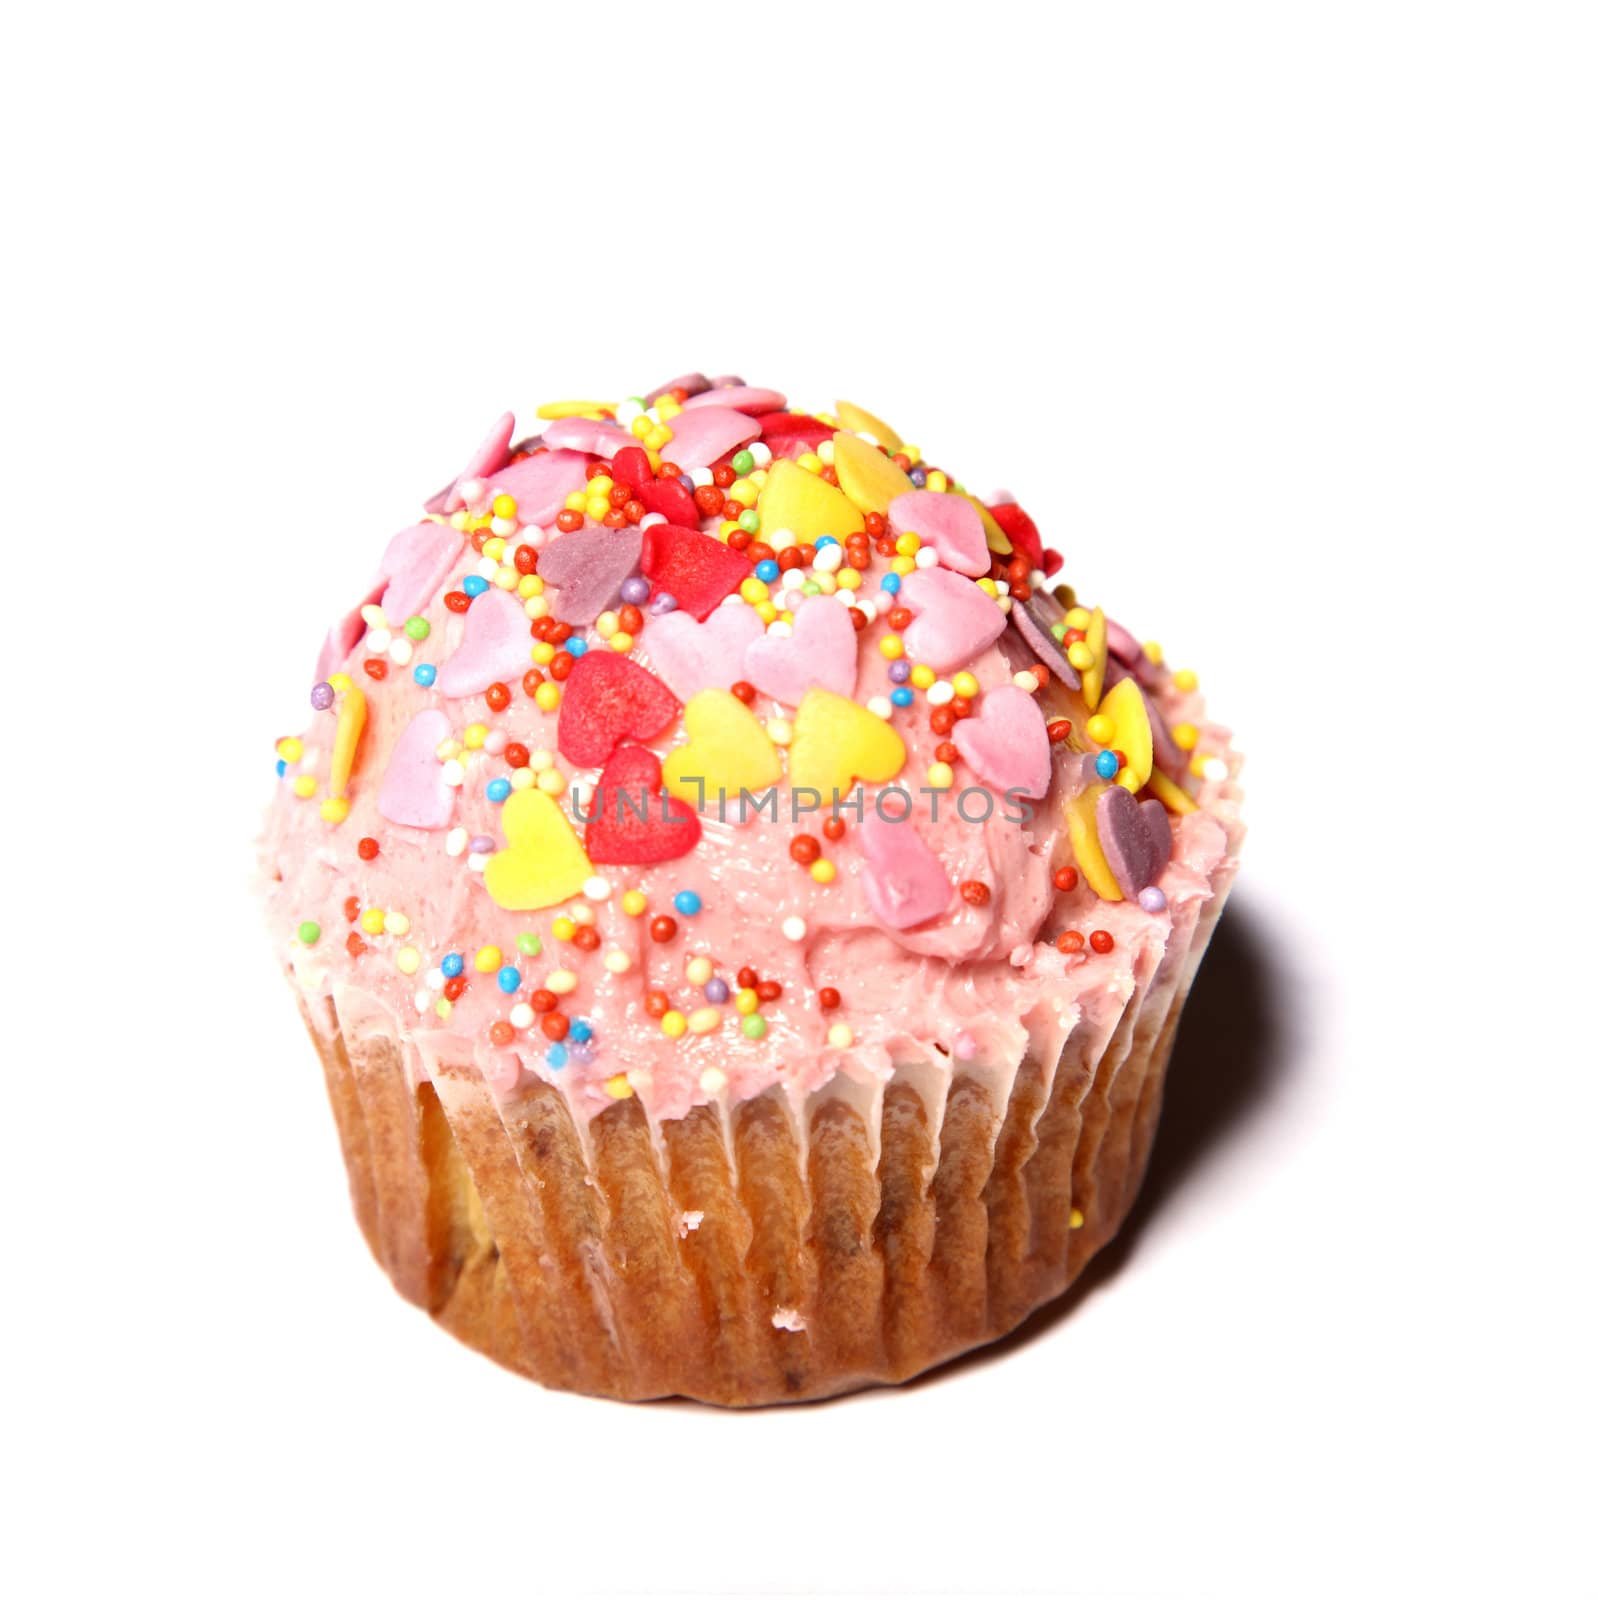 Pink Cupcake - homemade  by Farina6000